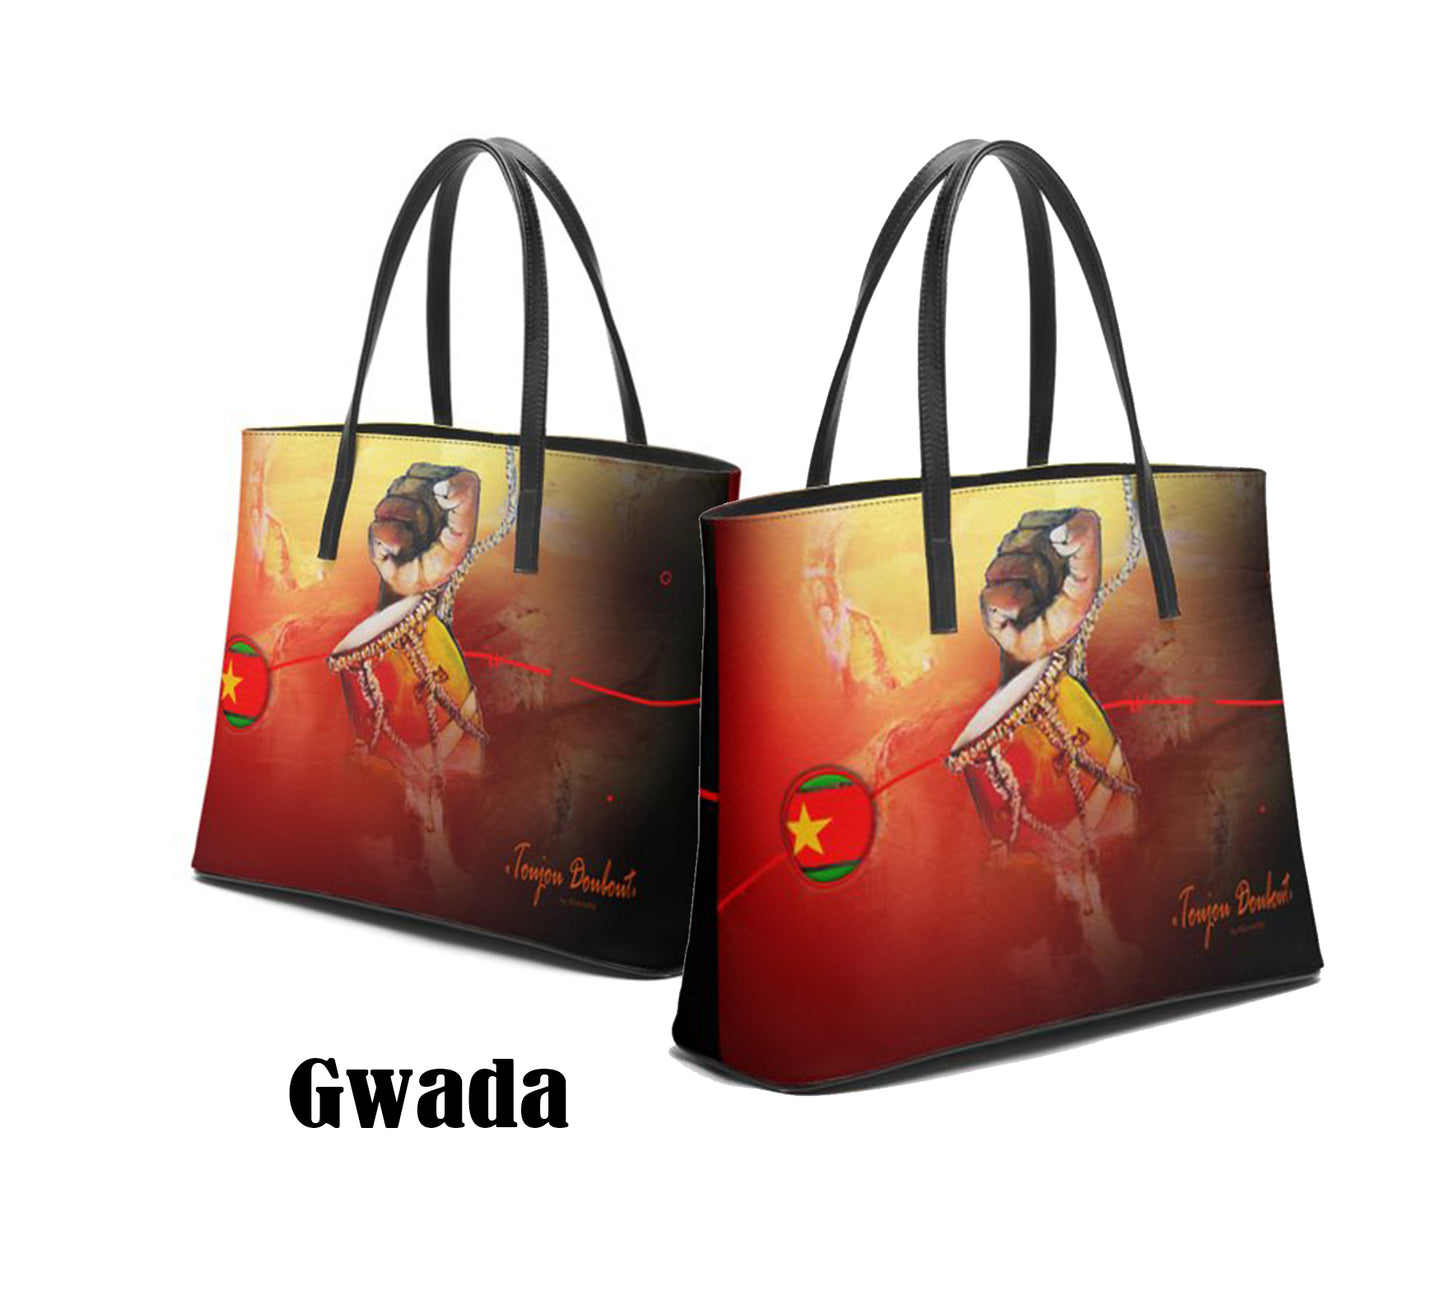 The "Bwadifé" bag